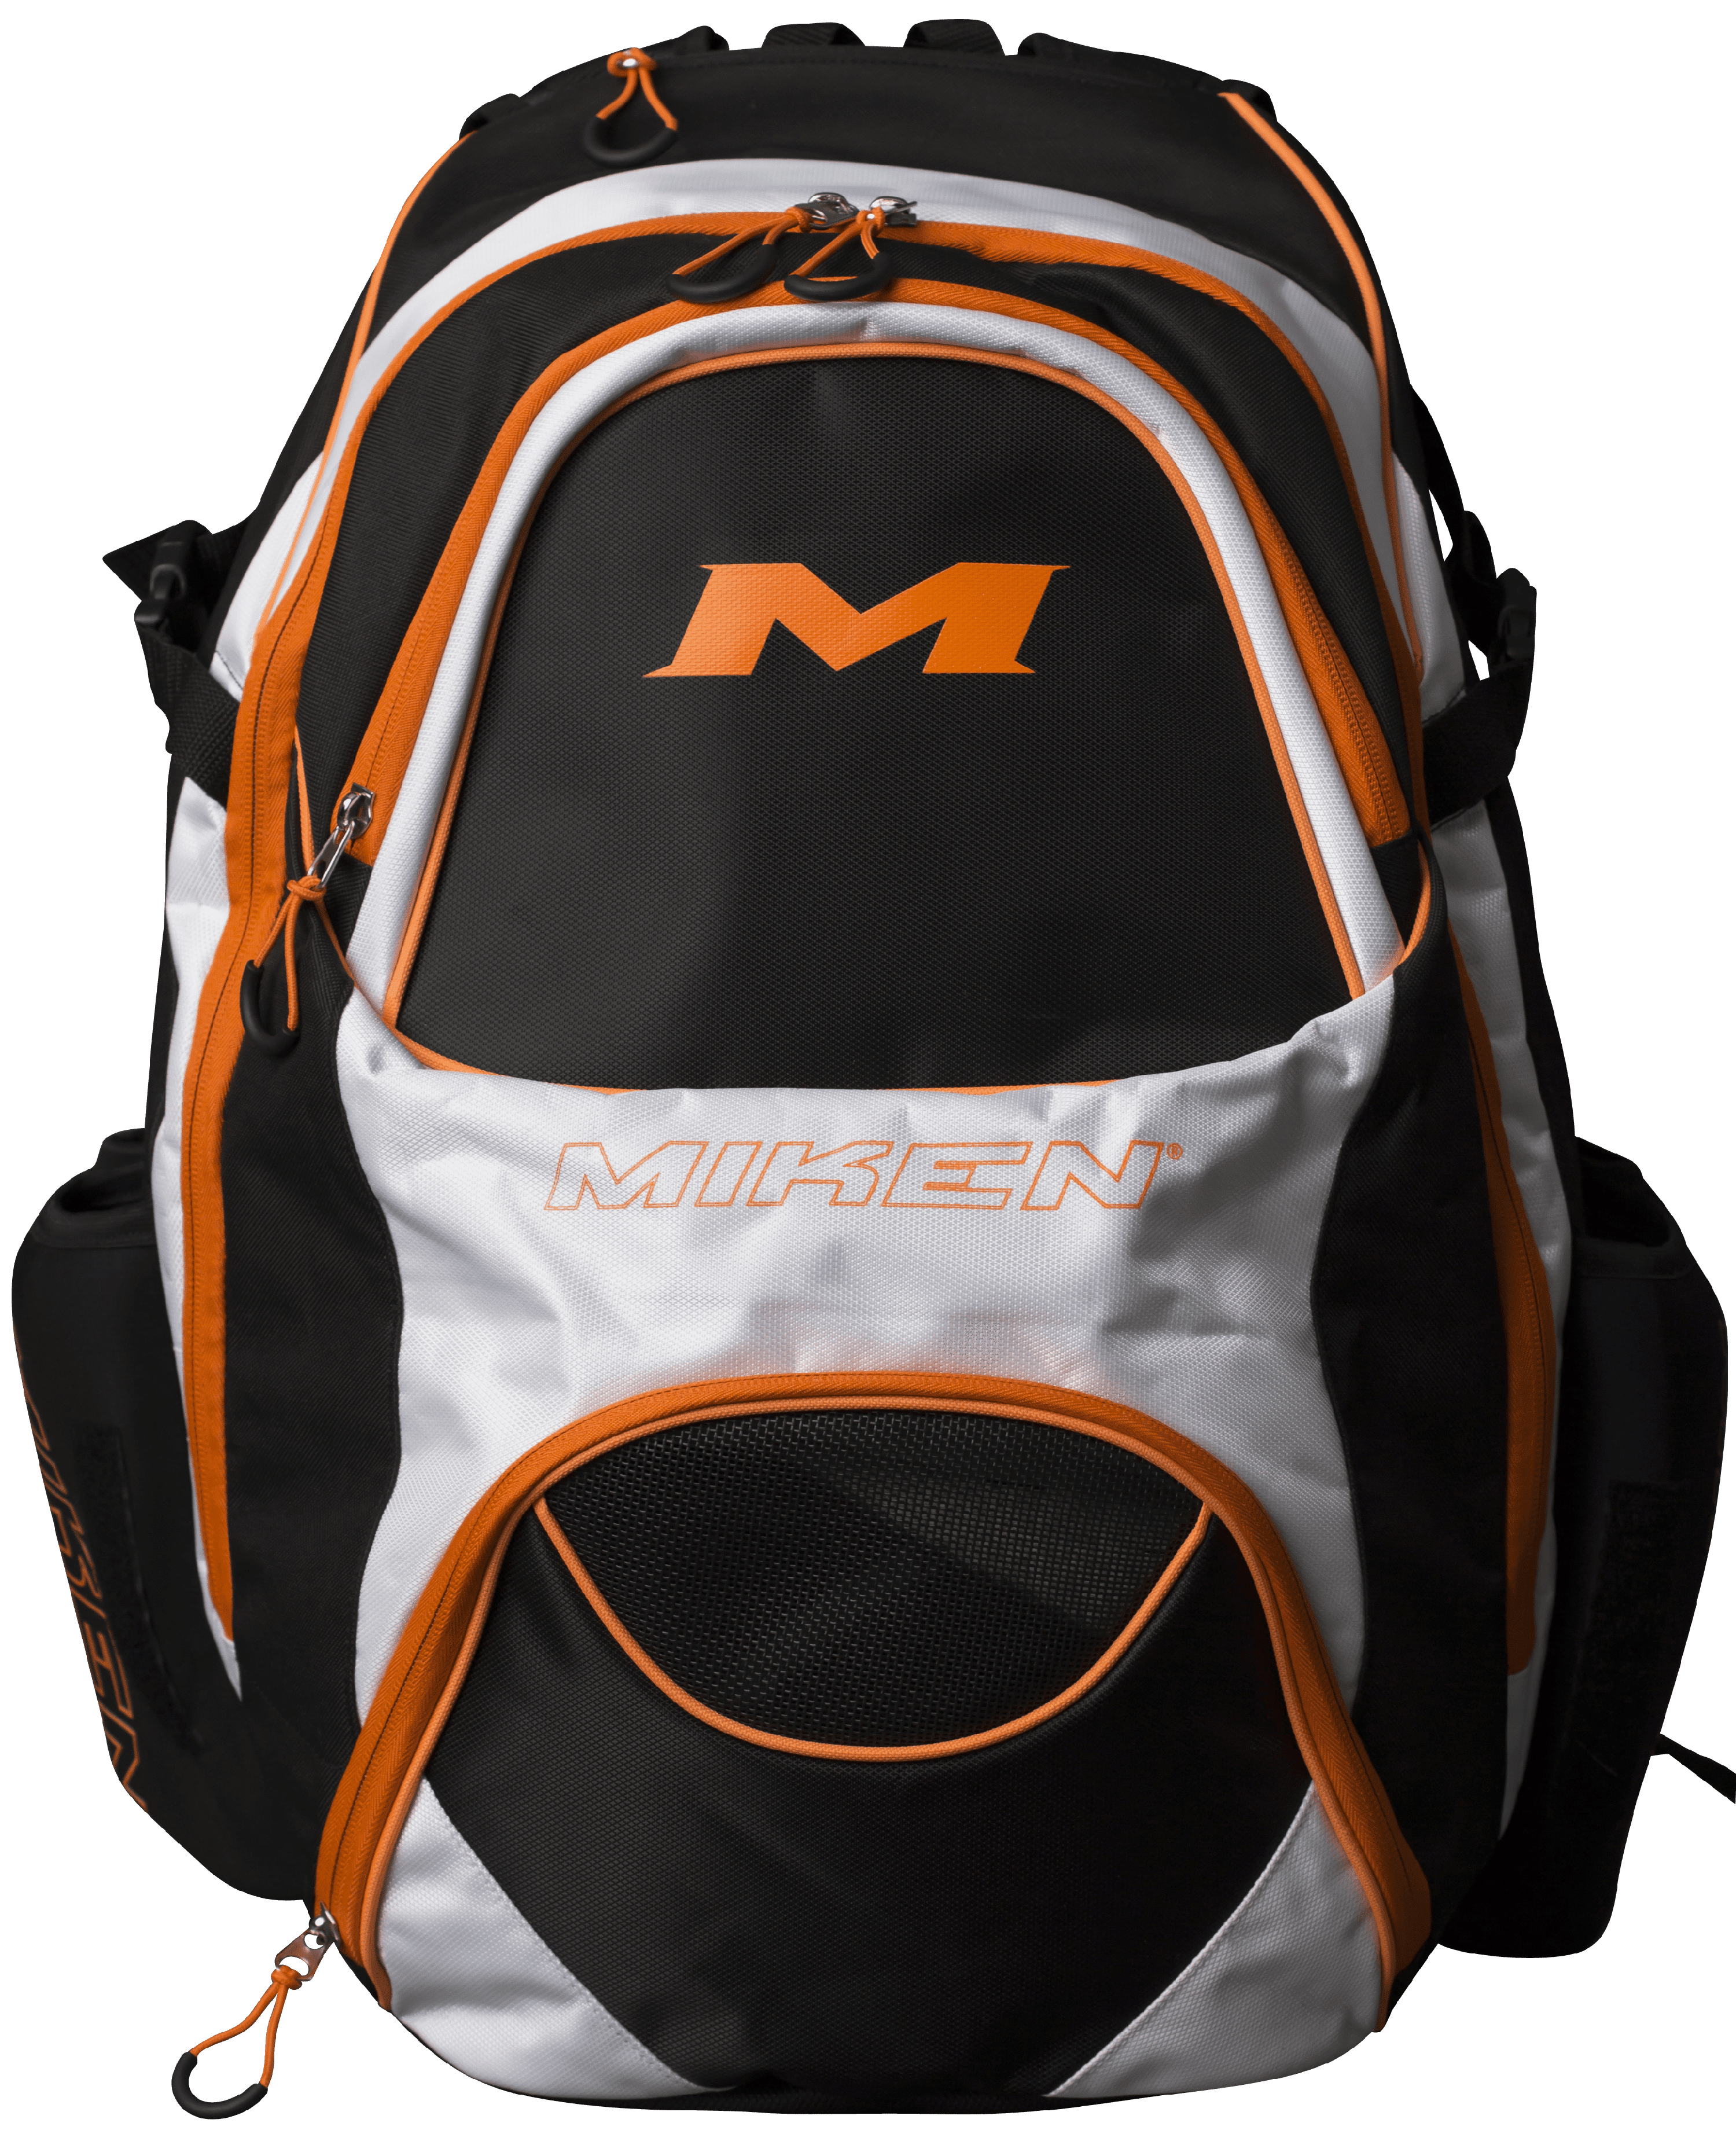 Miken Players Gold Backpack Bat/Equipment Bag MKBG18-BP-GLD 